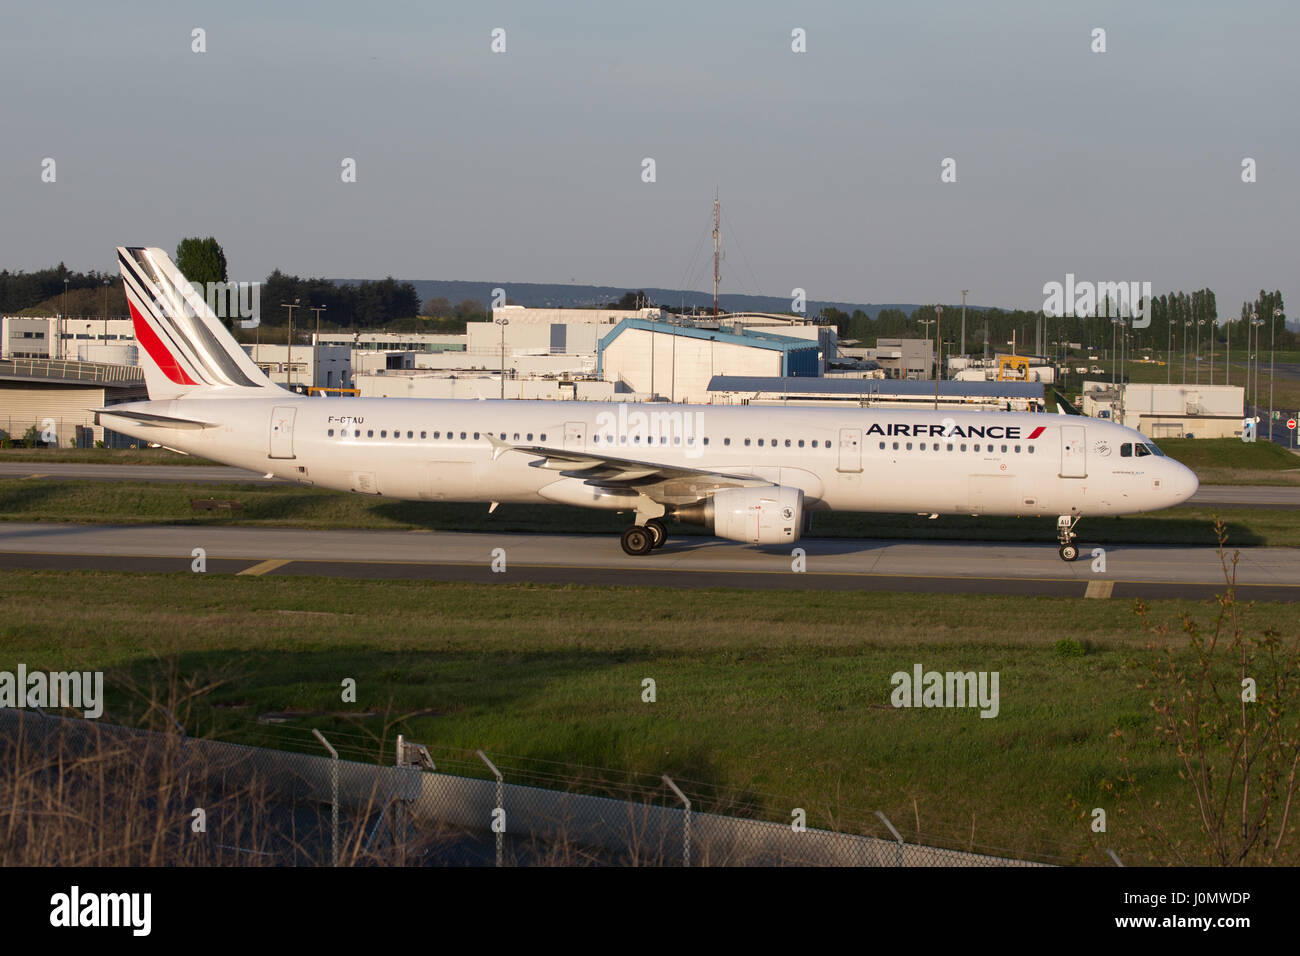 Air France Airbus A321 Aircraft Image Stock Photo